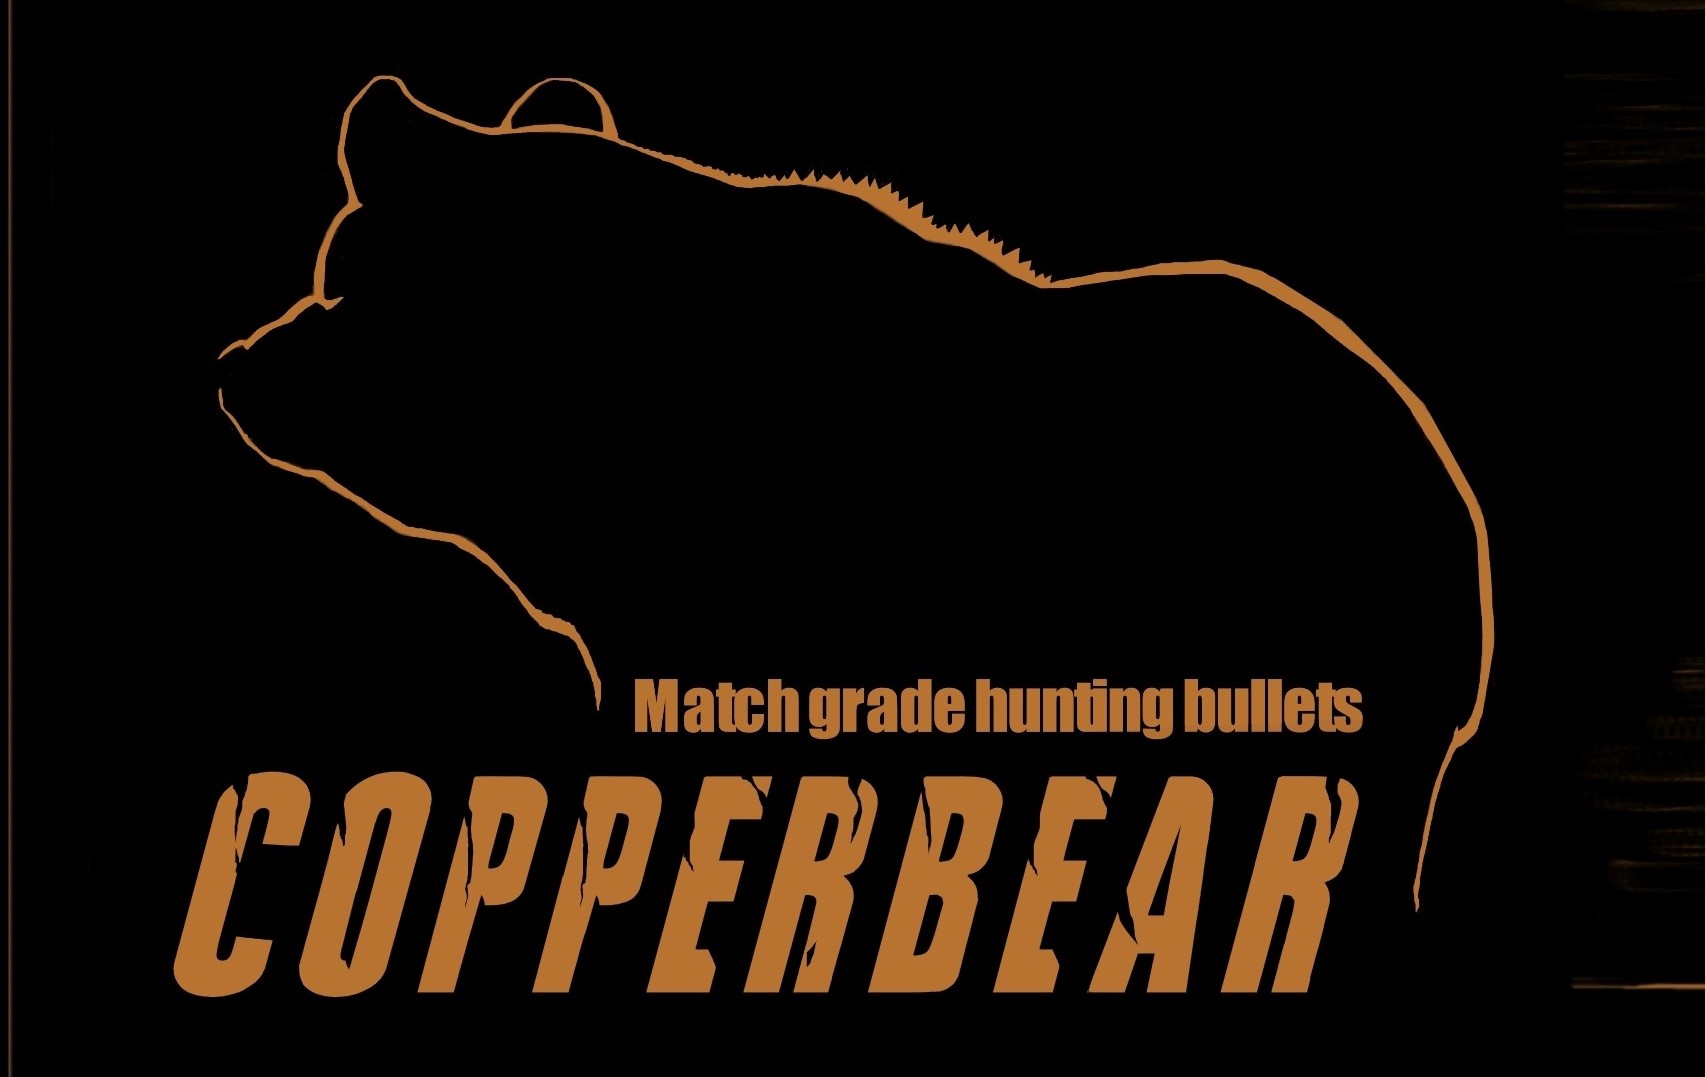 COPPERBEAR Matchgrade hunting bullets